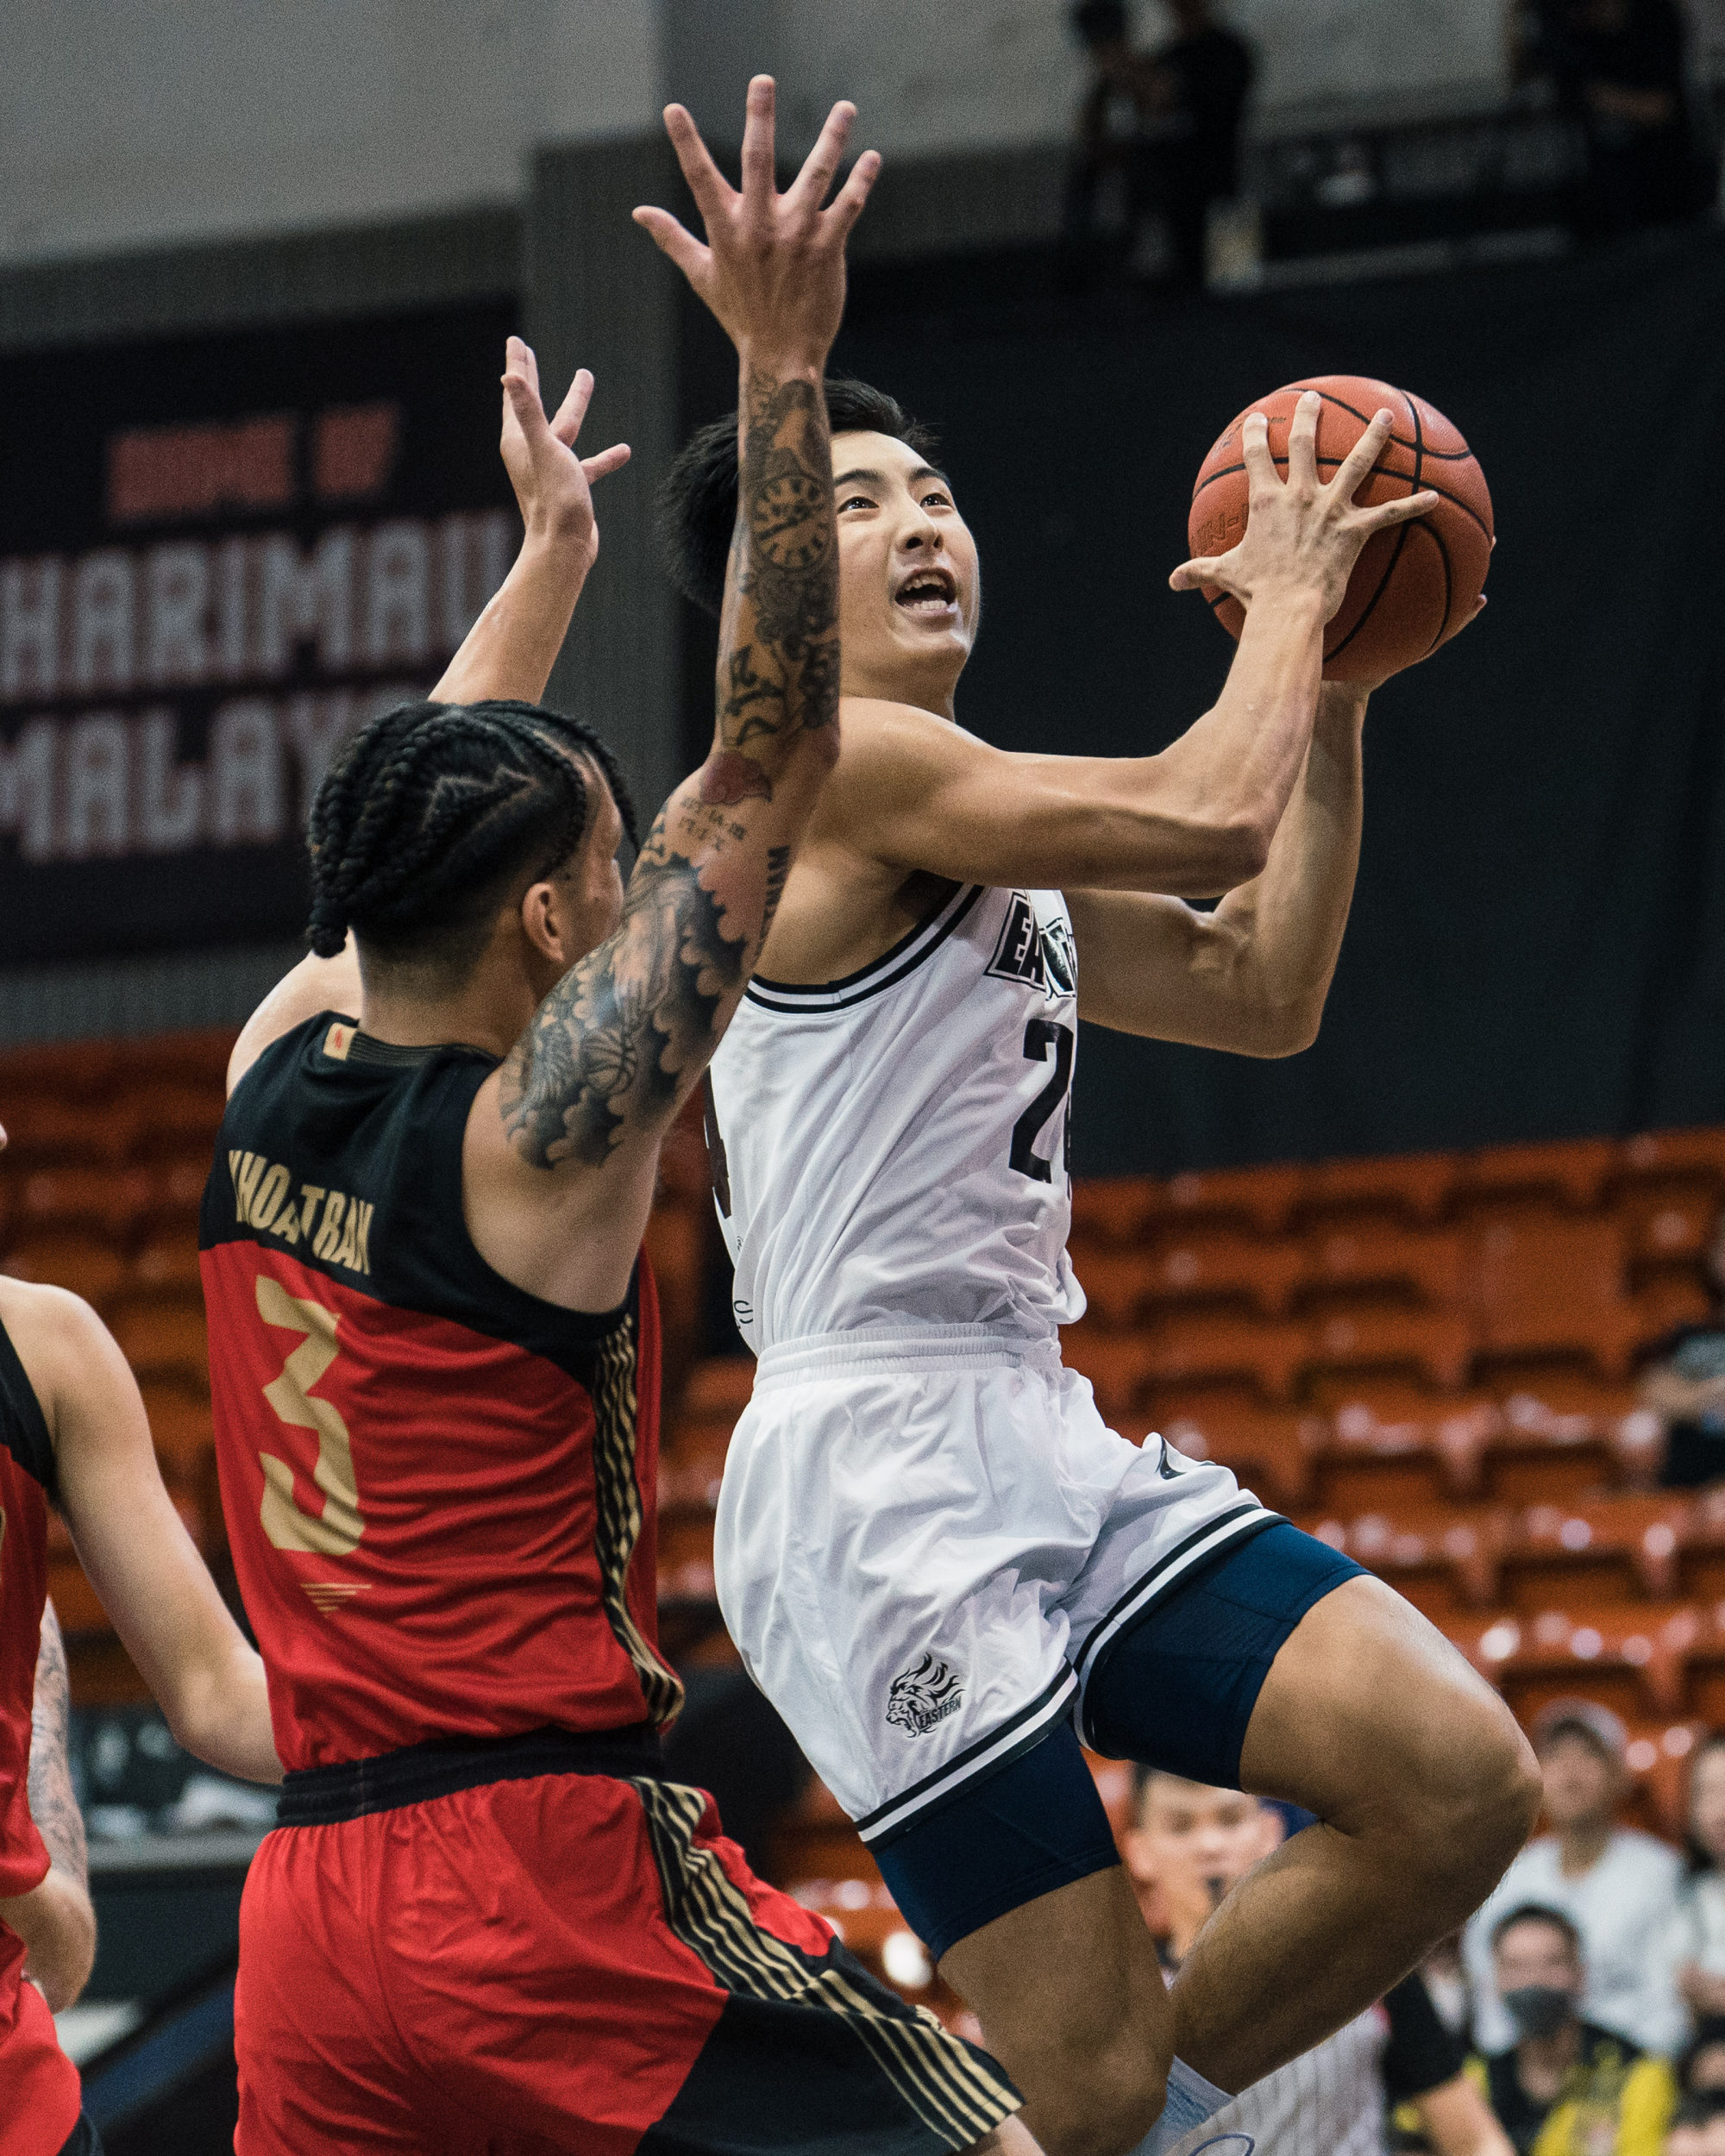 Asean Basketball League: Eastern's Chan Siu-wing relishing face